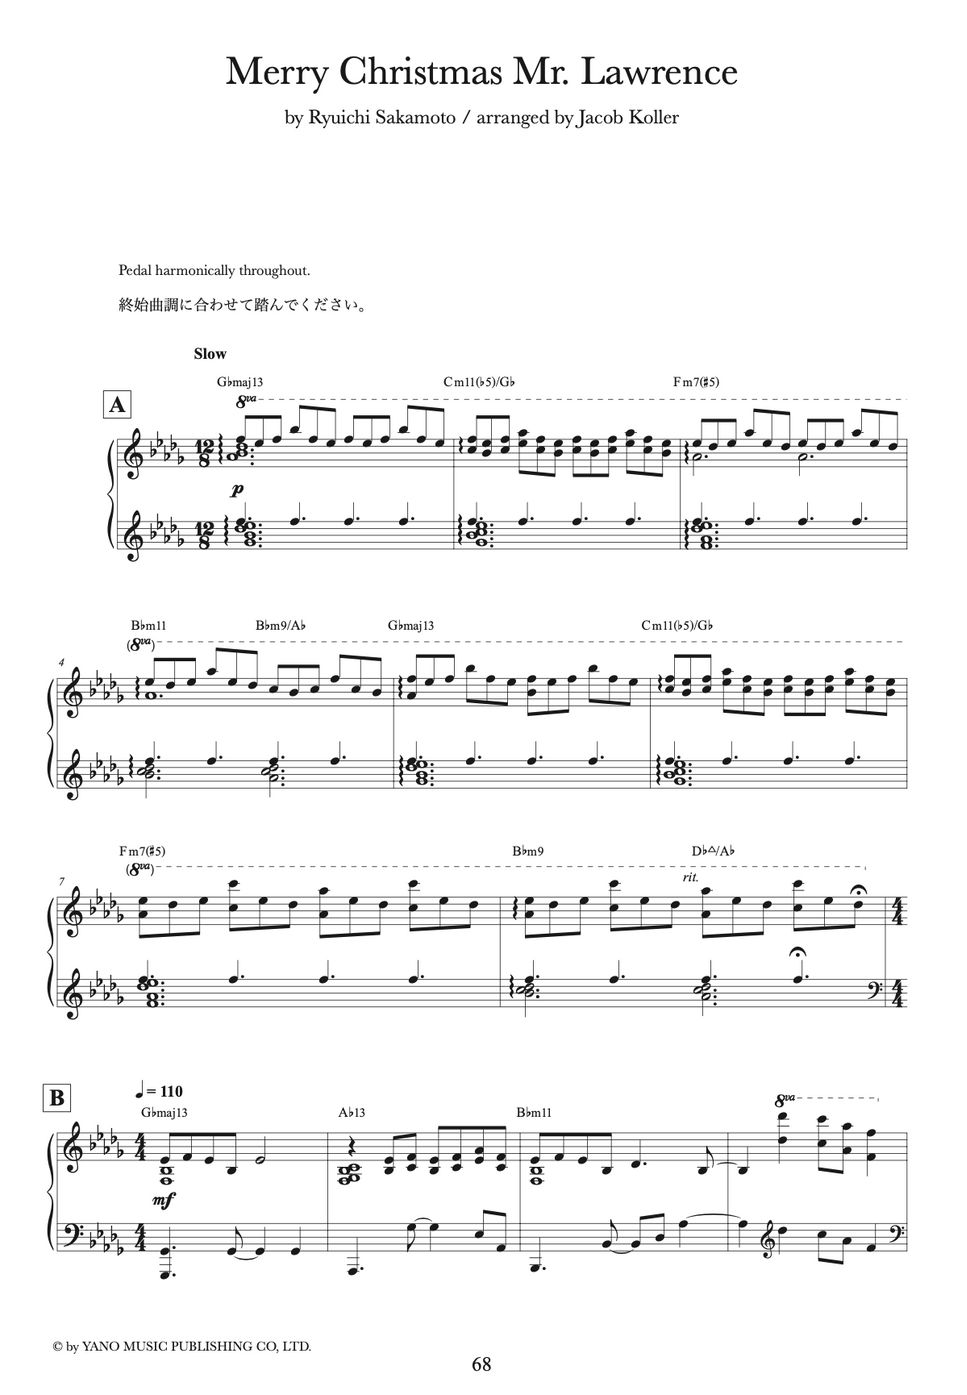 Ryuichi Sakamoto - Merry Christmas Mr. Lawrence (Modern jazz piano arrangement) by Jacob Koller